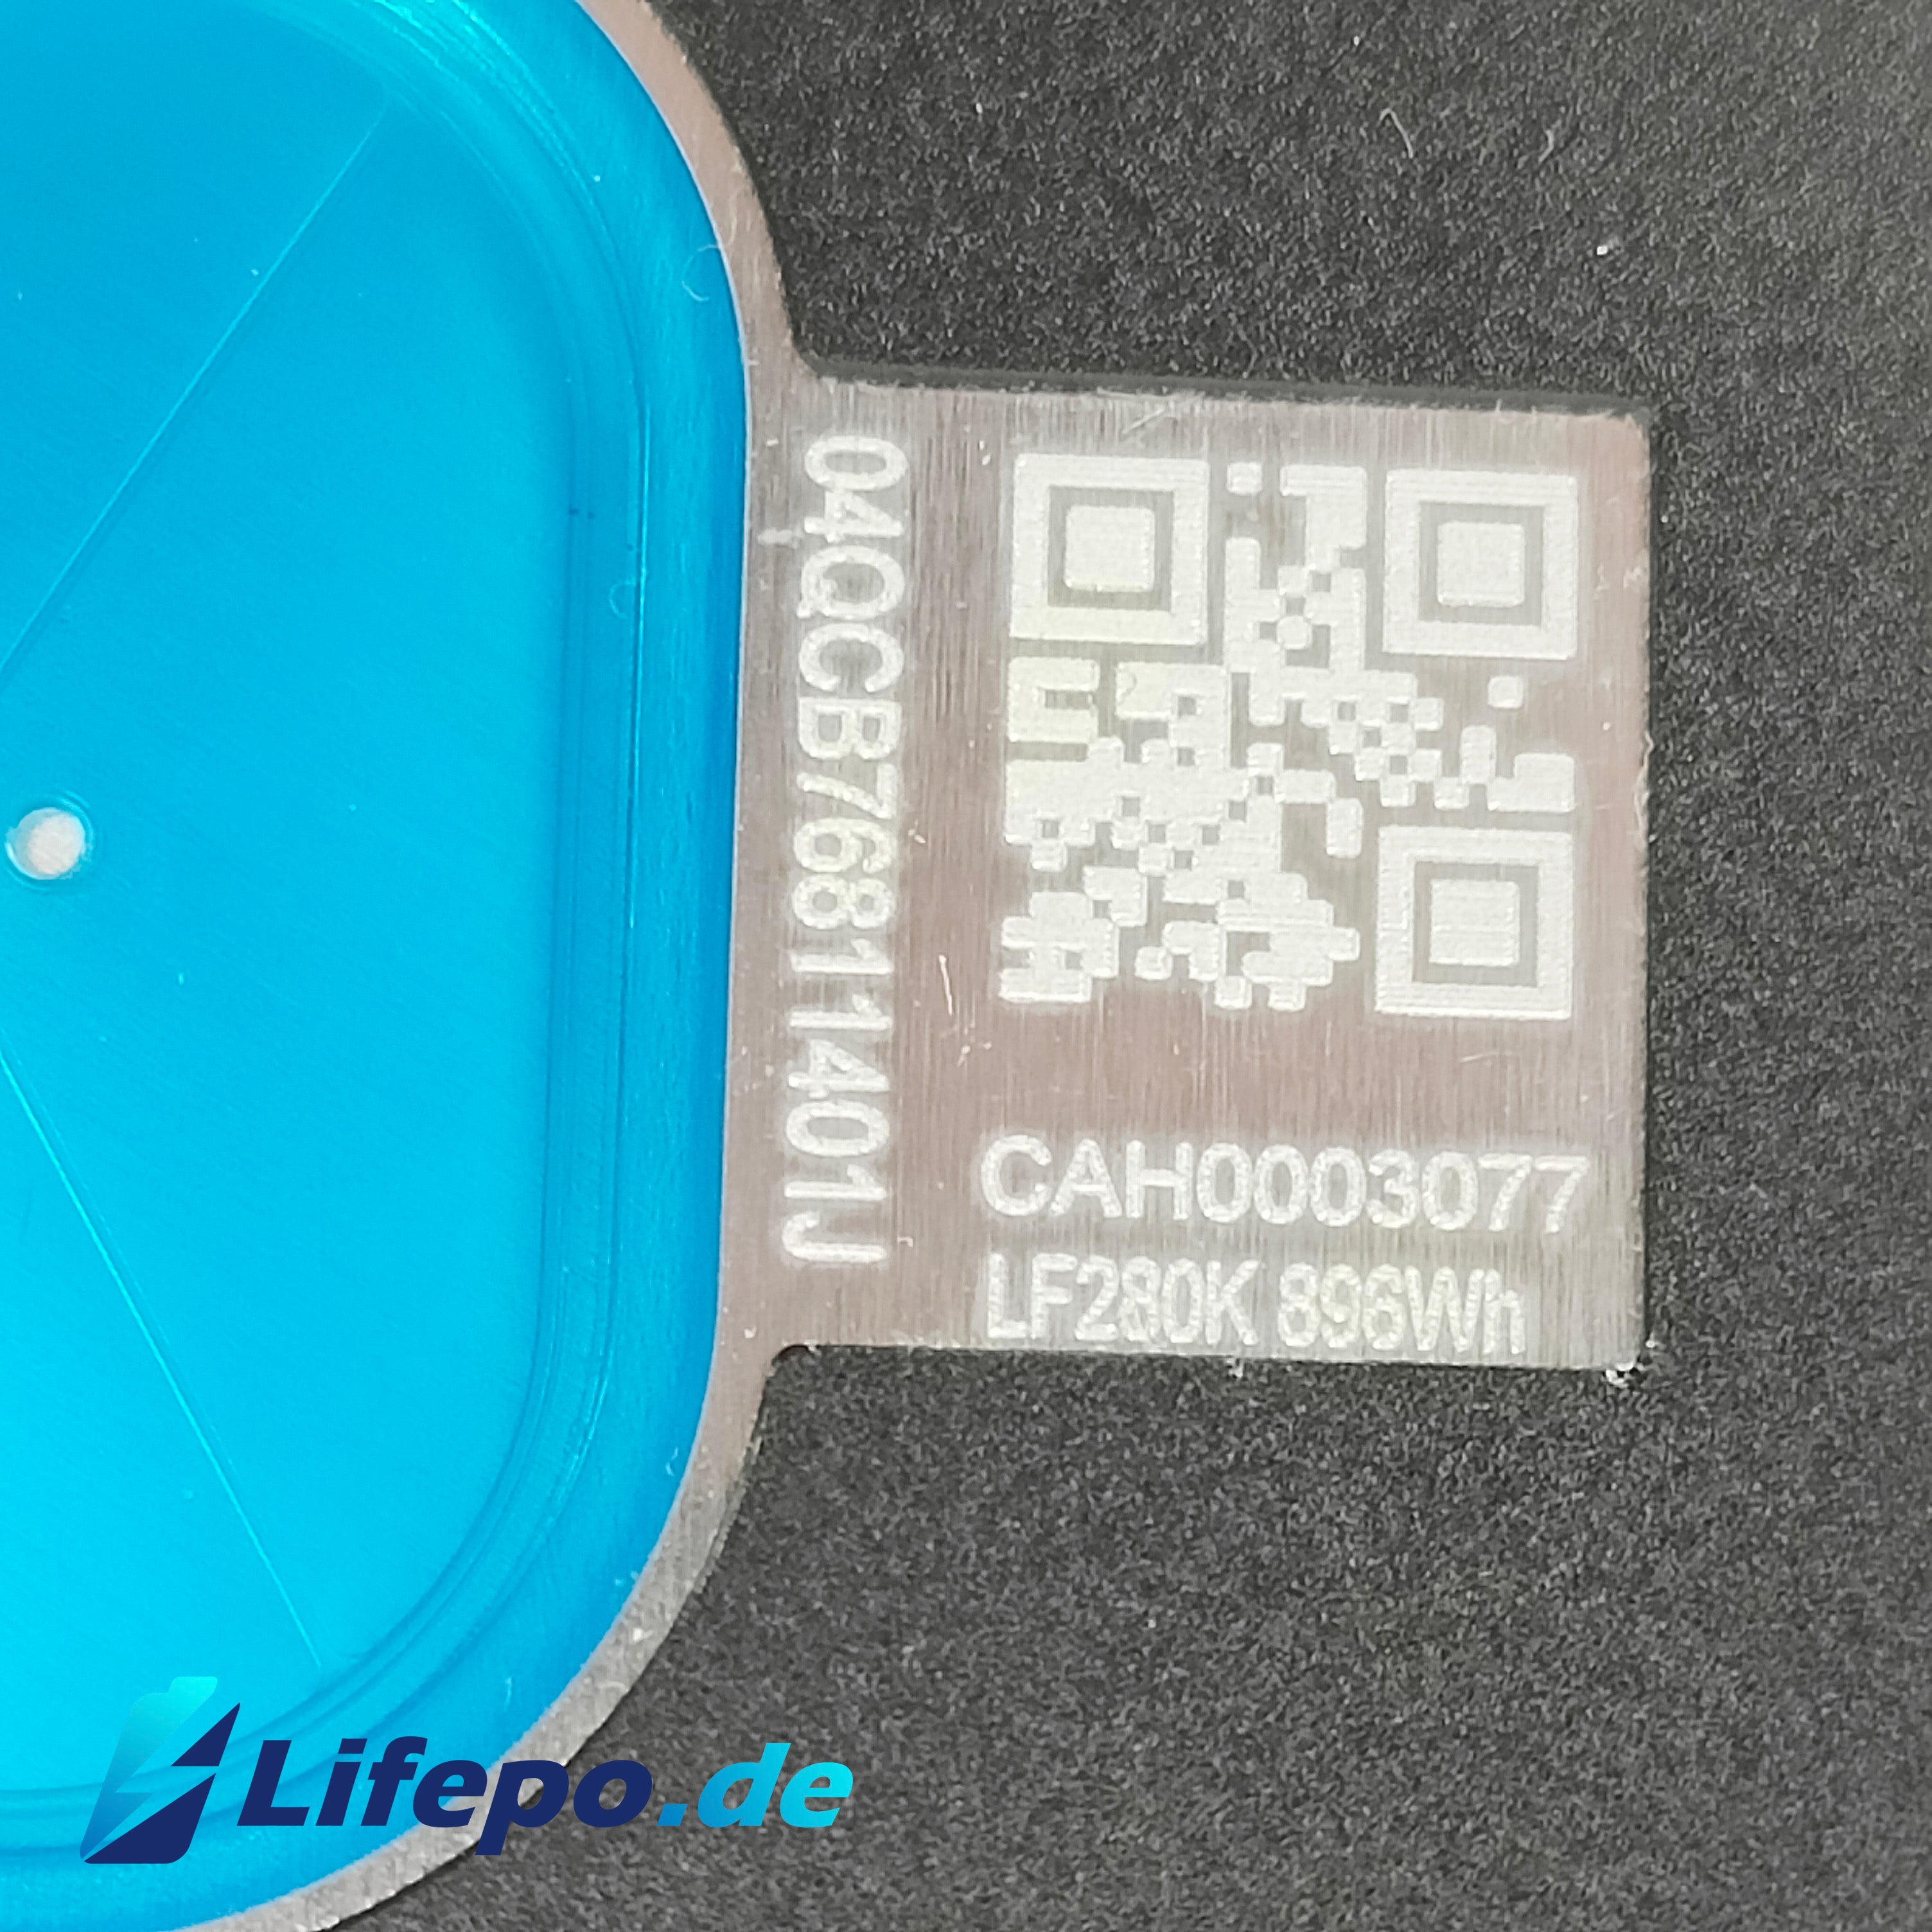 12v 560Ah Lifepo4 Batteriesystem mit EVE Grade A+ 7,6kWh